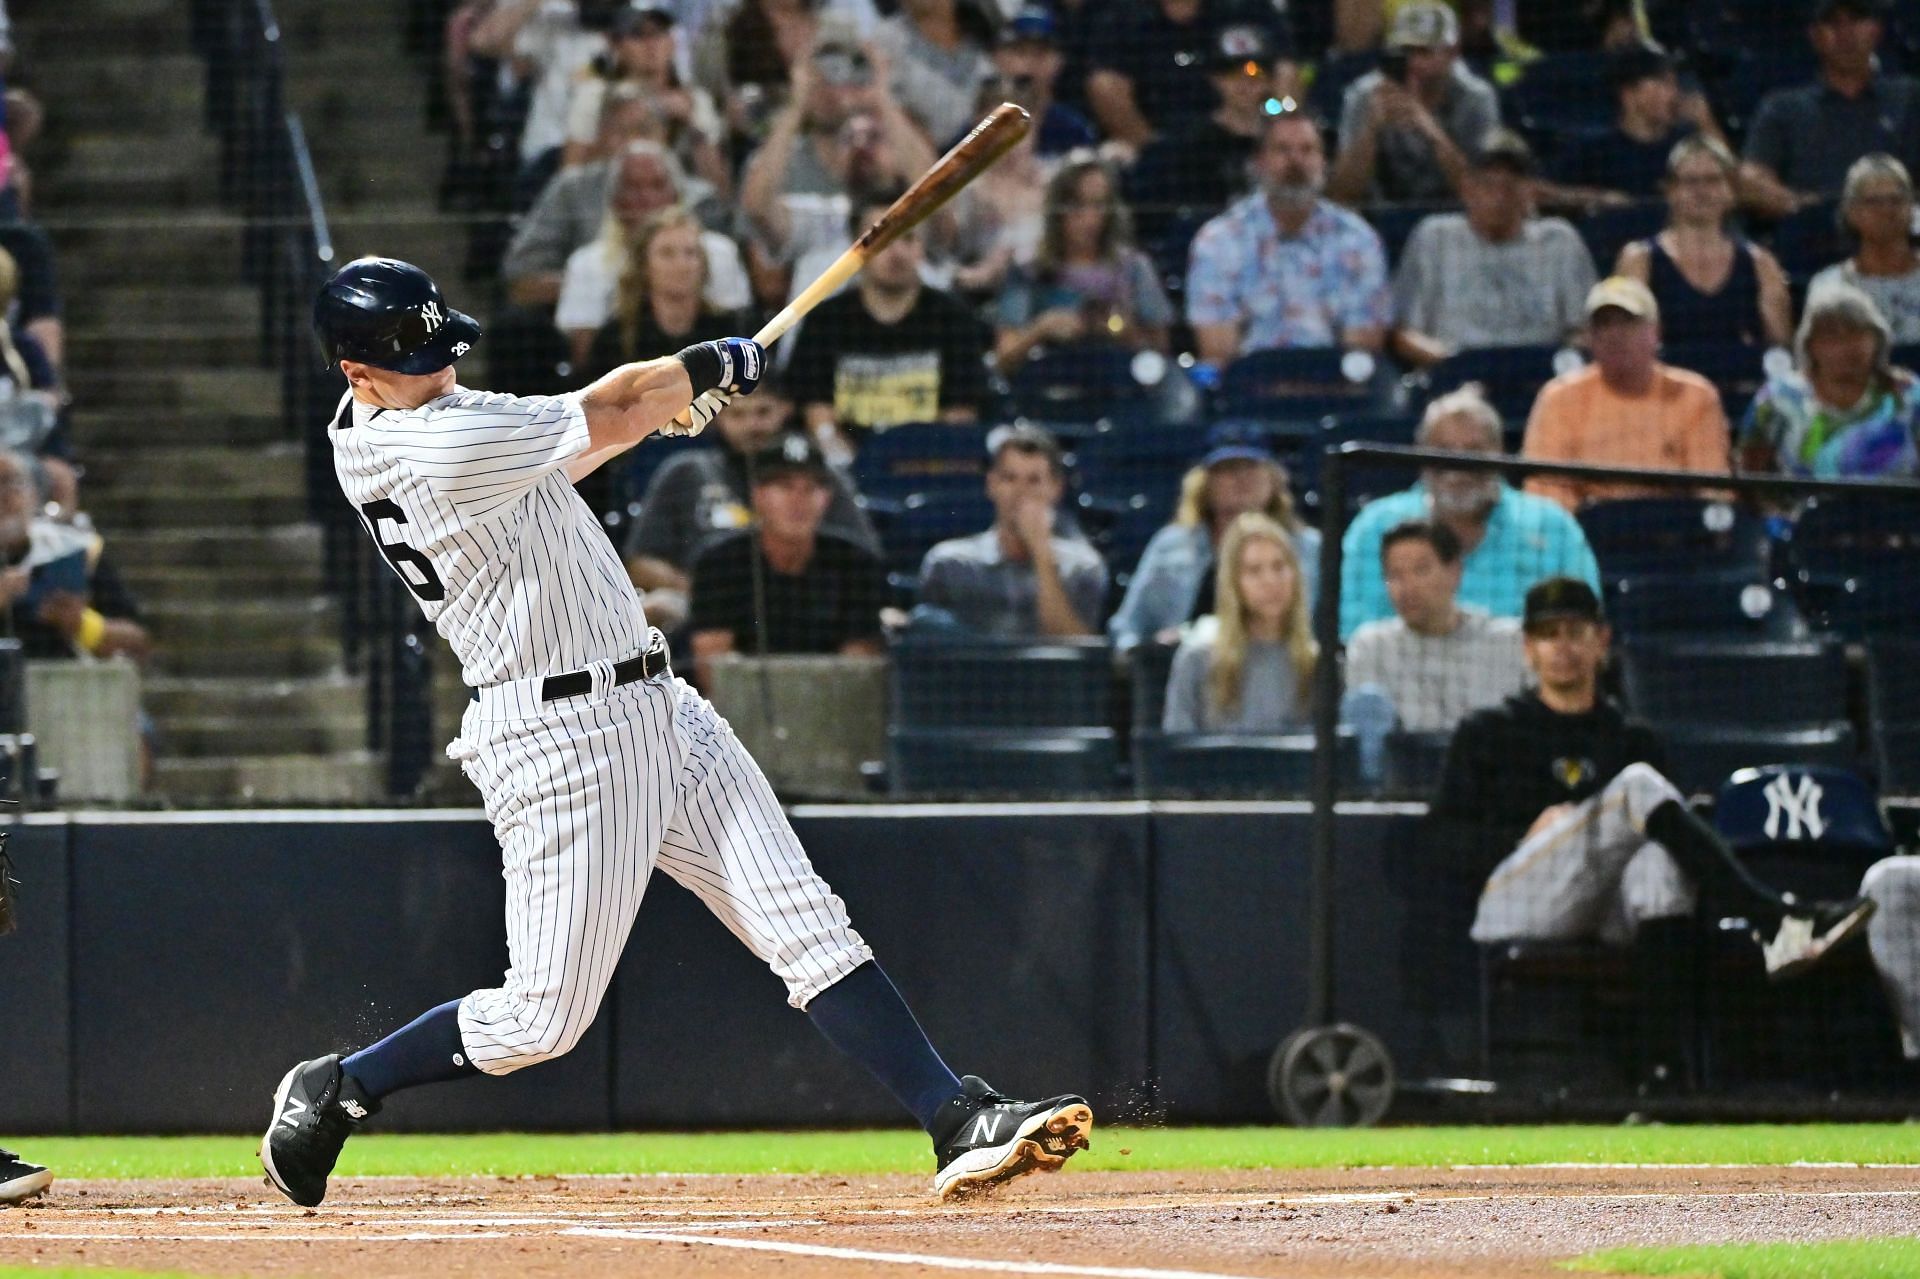 Blue Jays-Yankees at Yankee Stadium batting leadoff on Opening Day